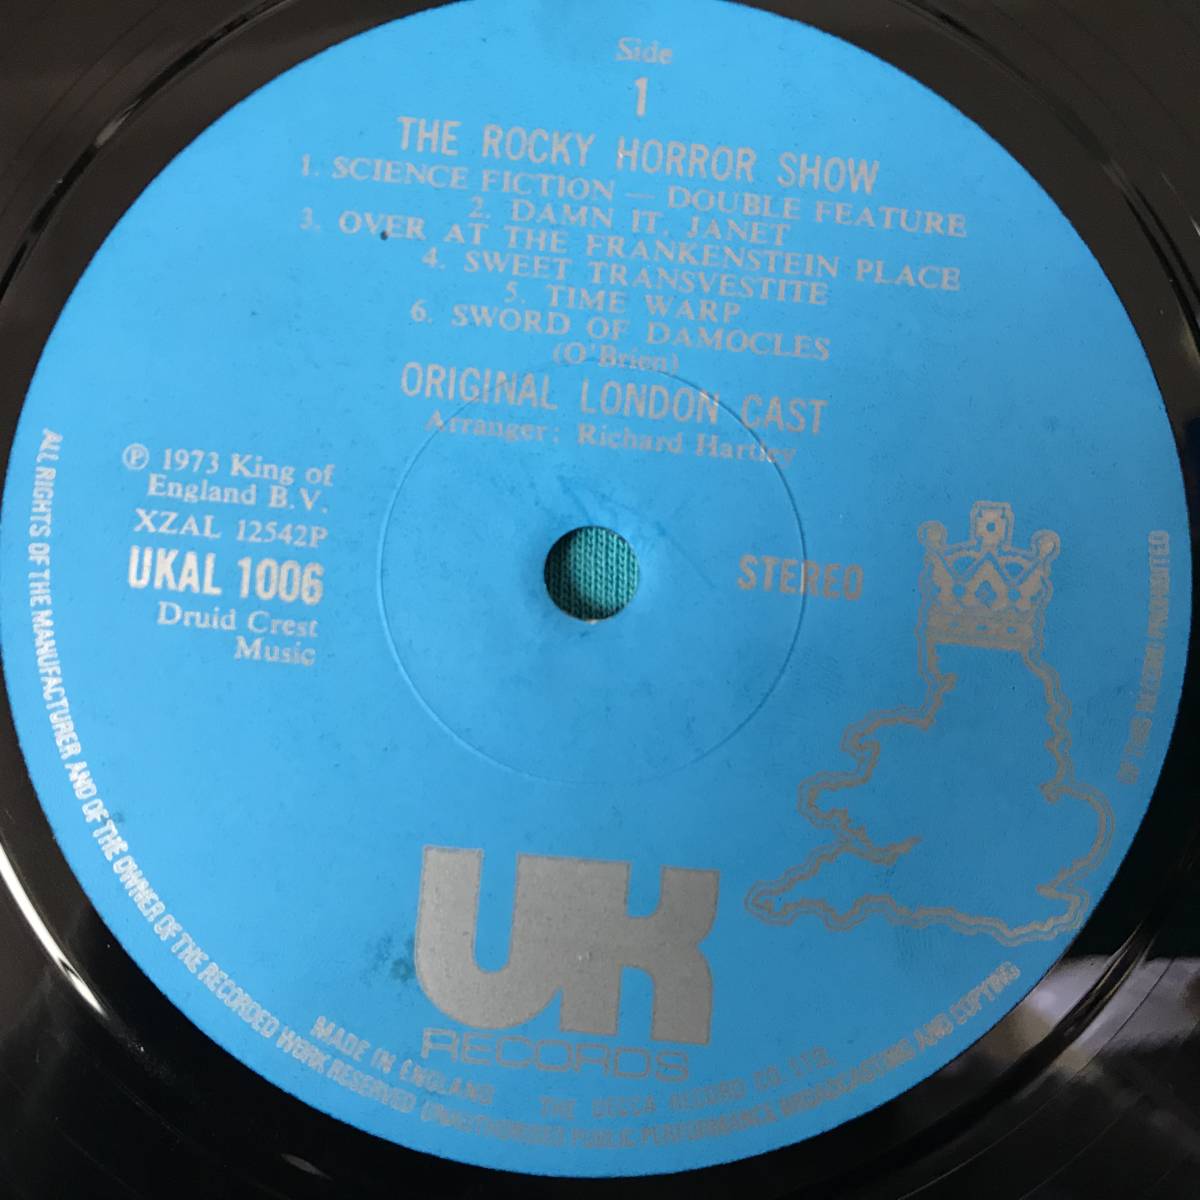 LP*The Rocky Horror Show Original London Cast UK original record UKAL1006